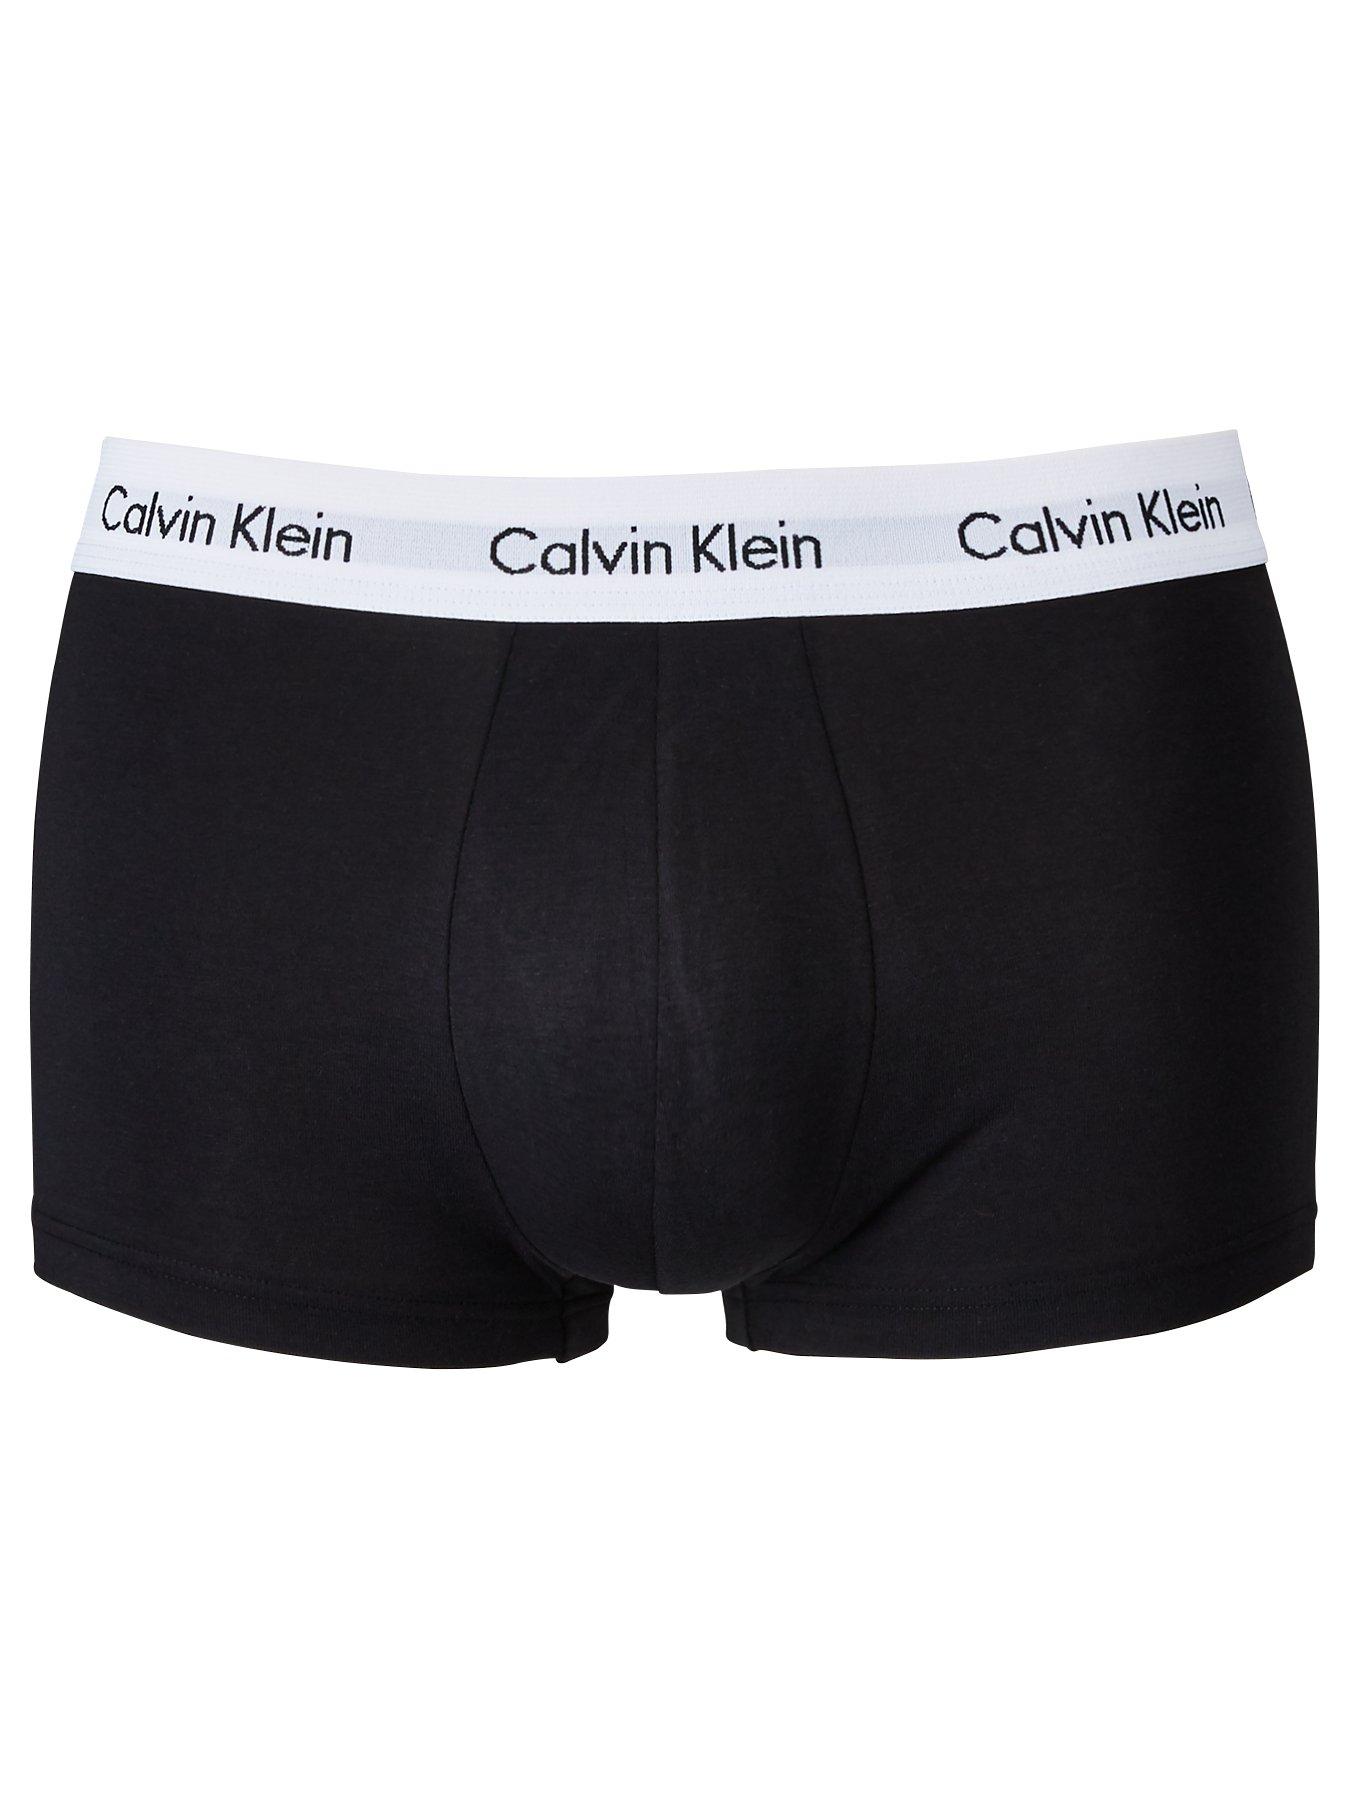 Calvin Klein Modern Performance Low Rise Trunks - Calvin Klein